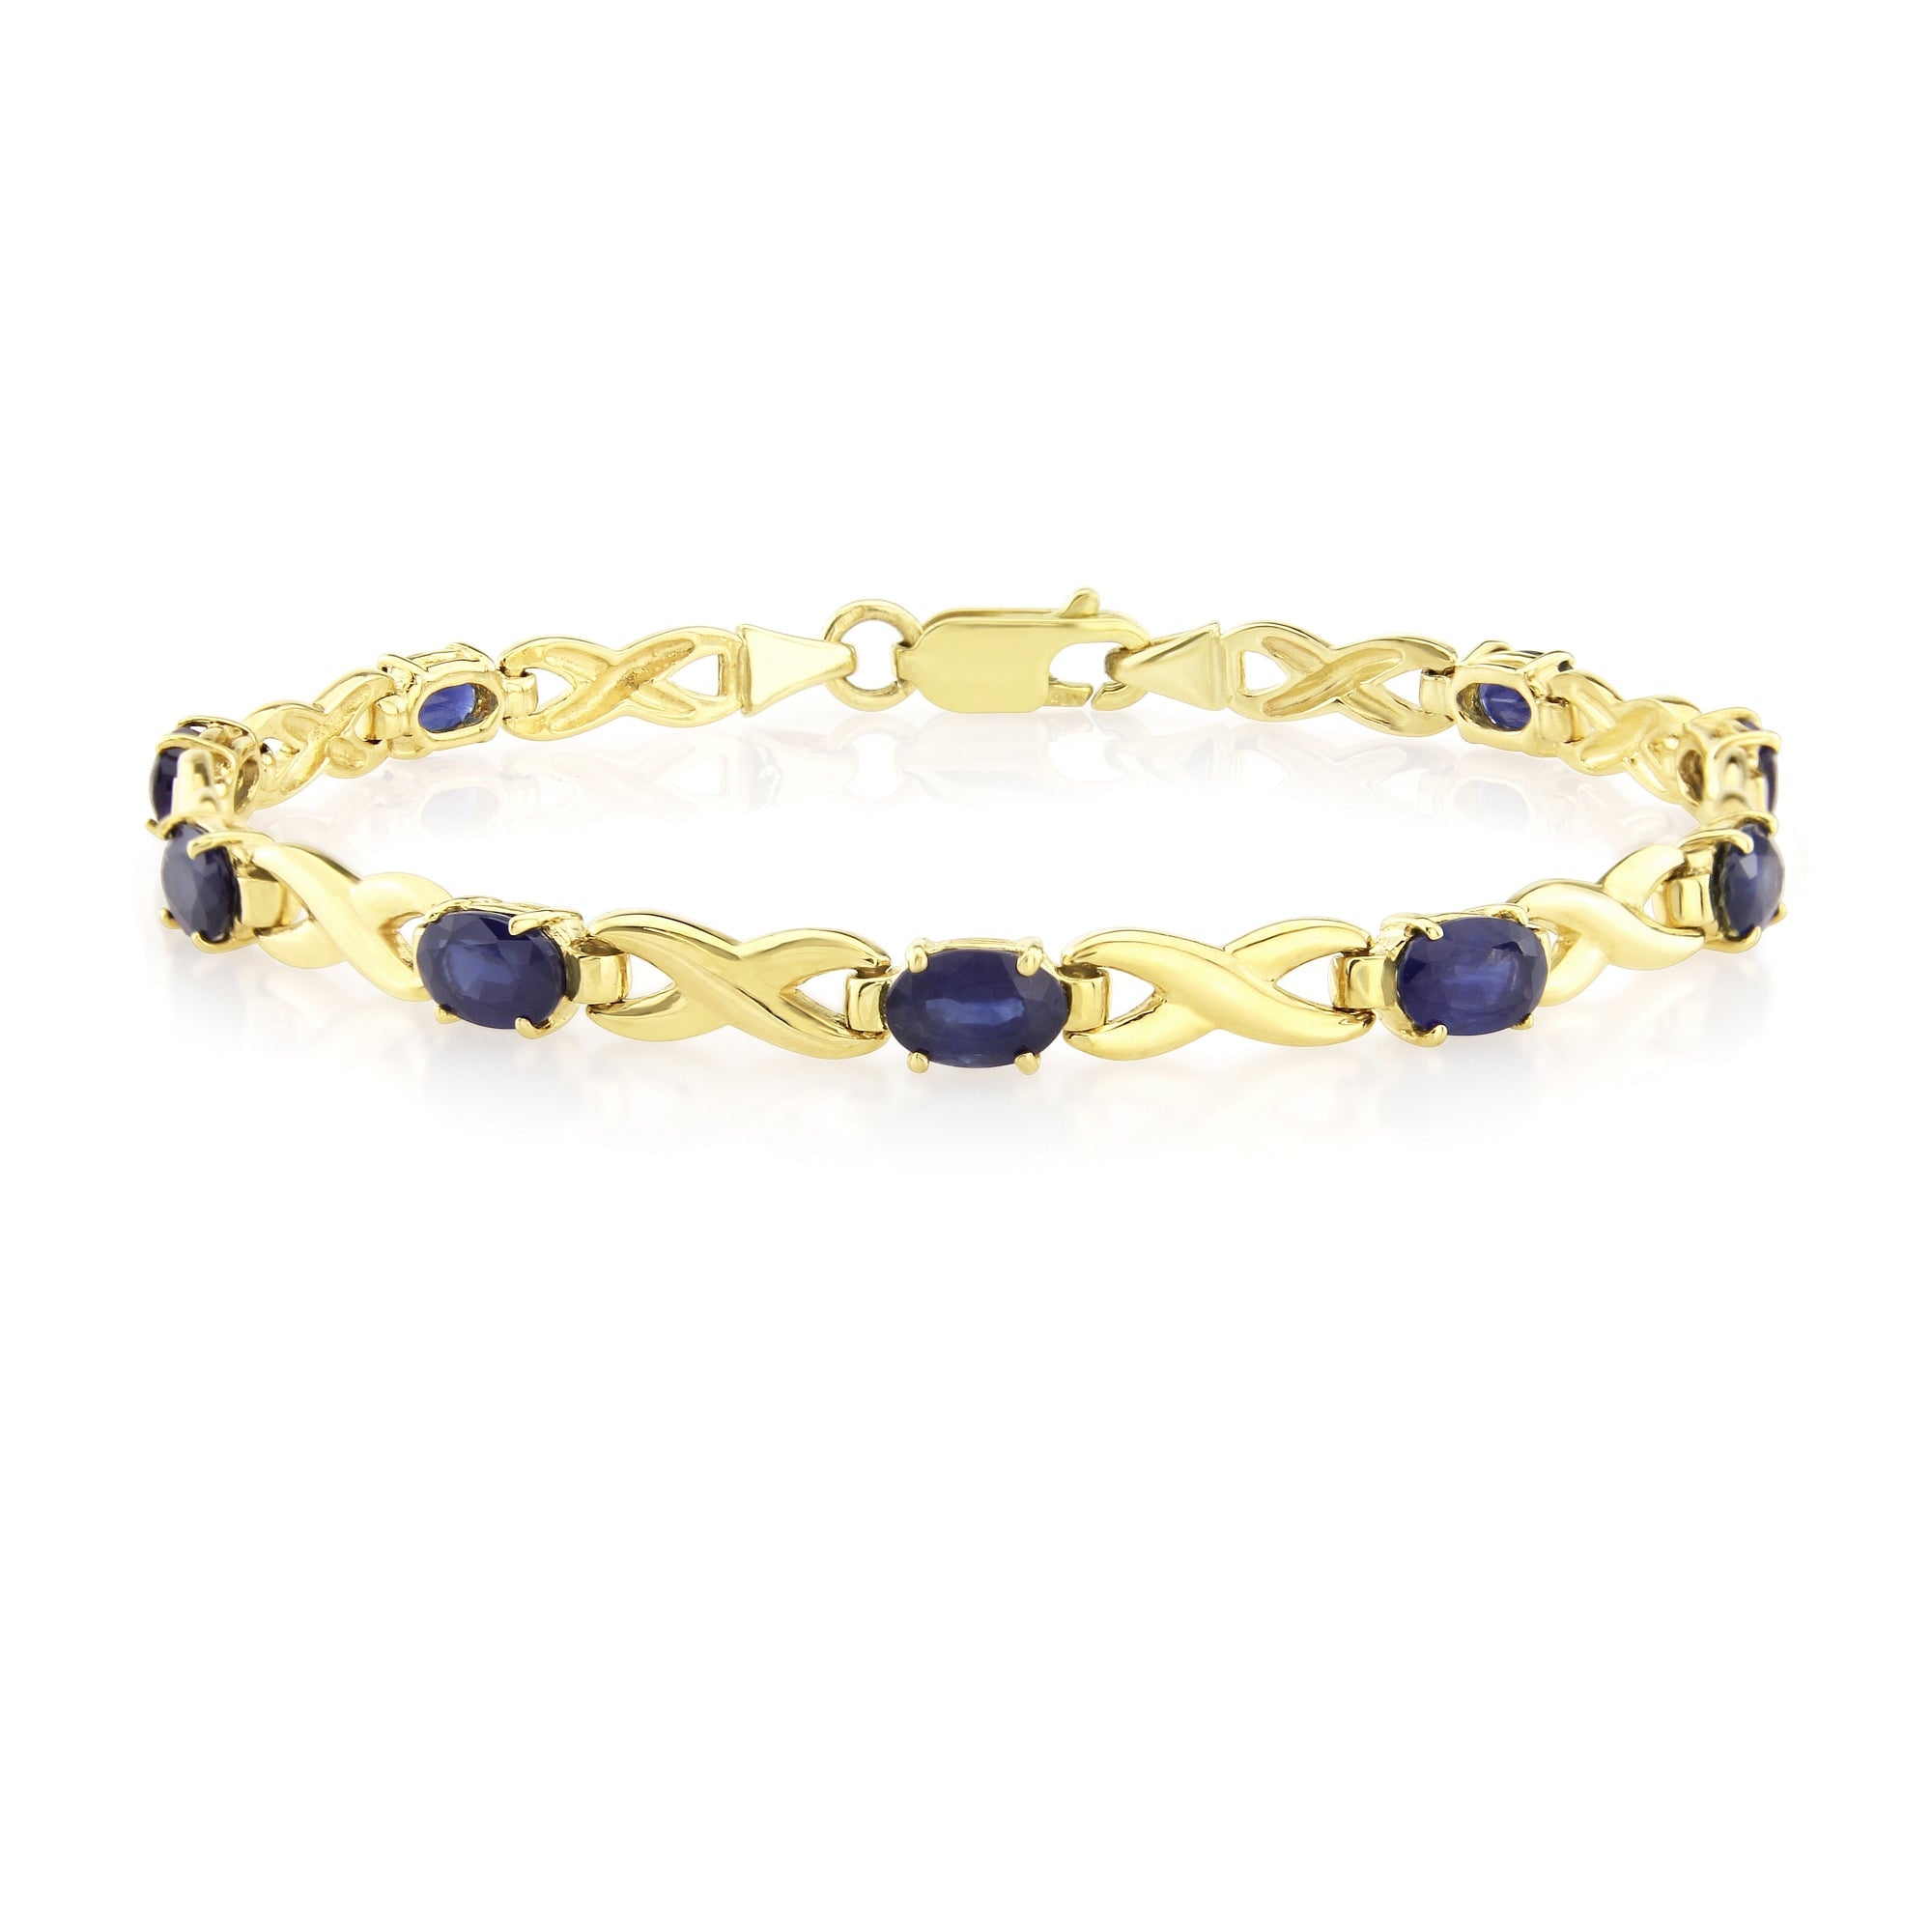 9ct gold 6x4mm oval sapphire bracelet